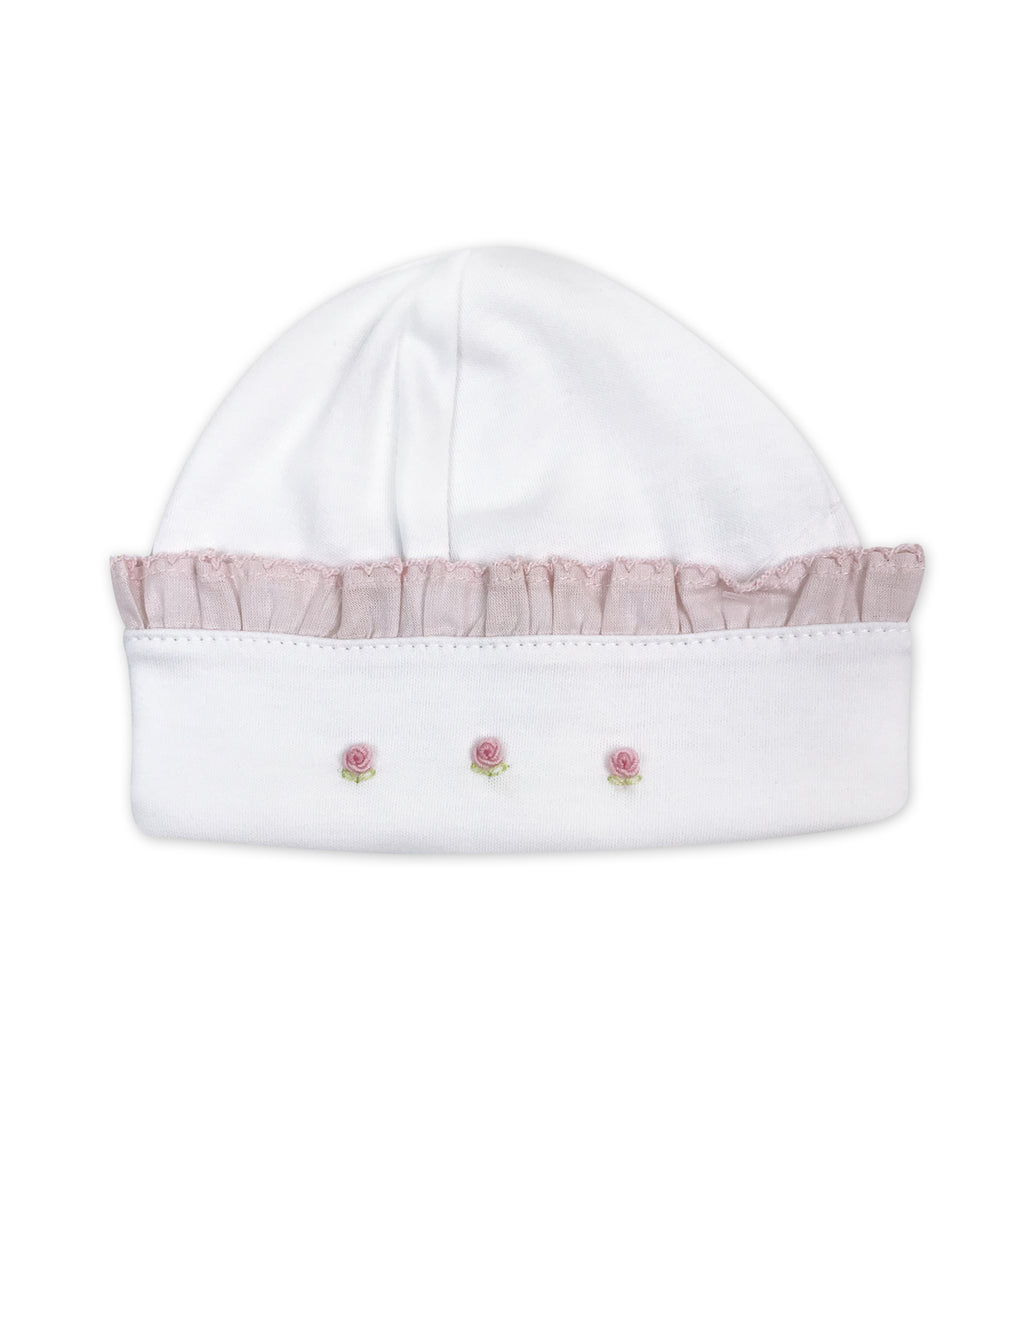 Baby Girl's White Pima Cotton Rose Buds Hat - Little Threads Inc. Children's Clothing